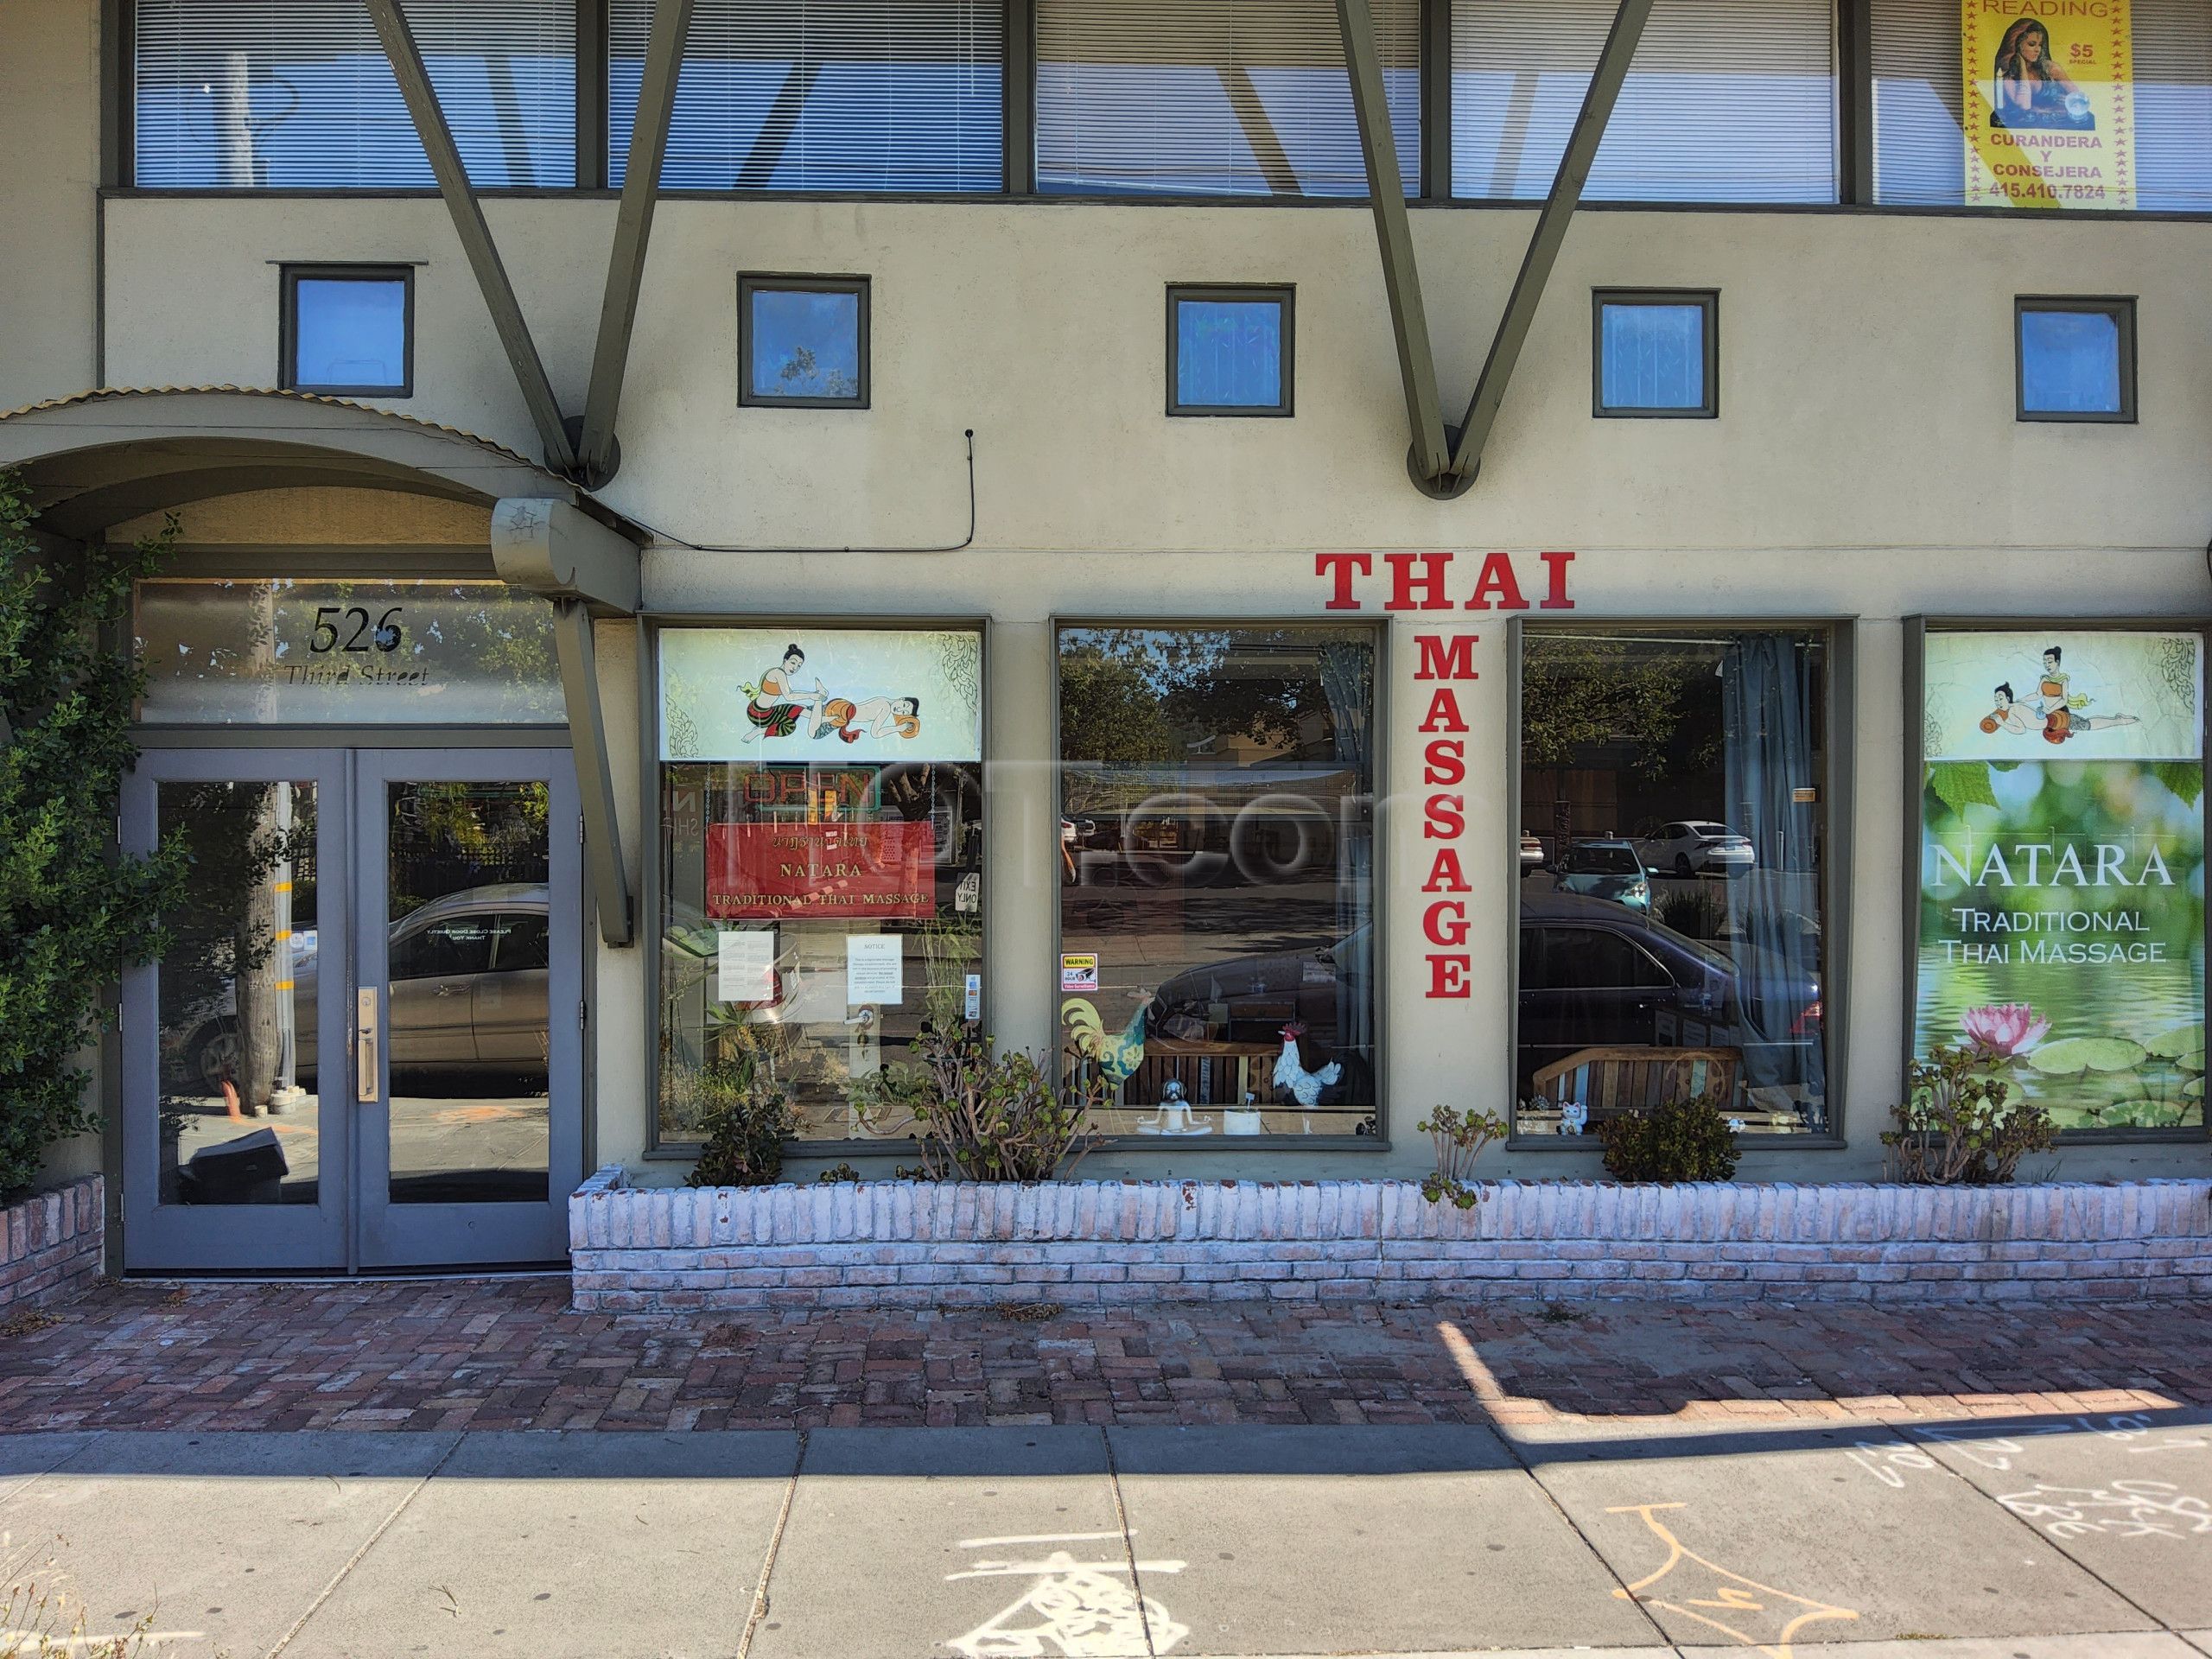 San Rafael, California Natara Traditional Thai Massage